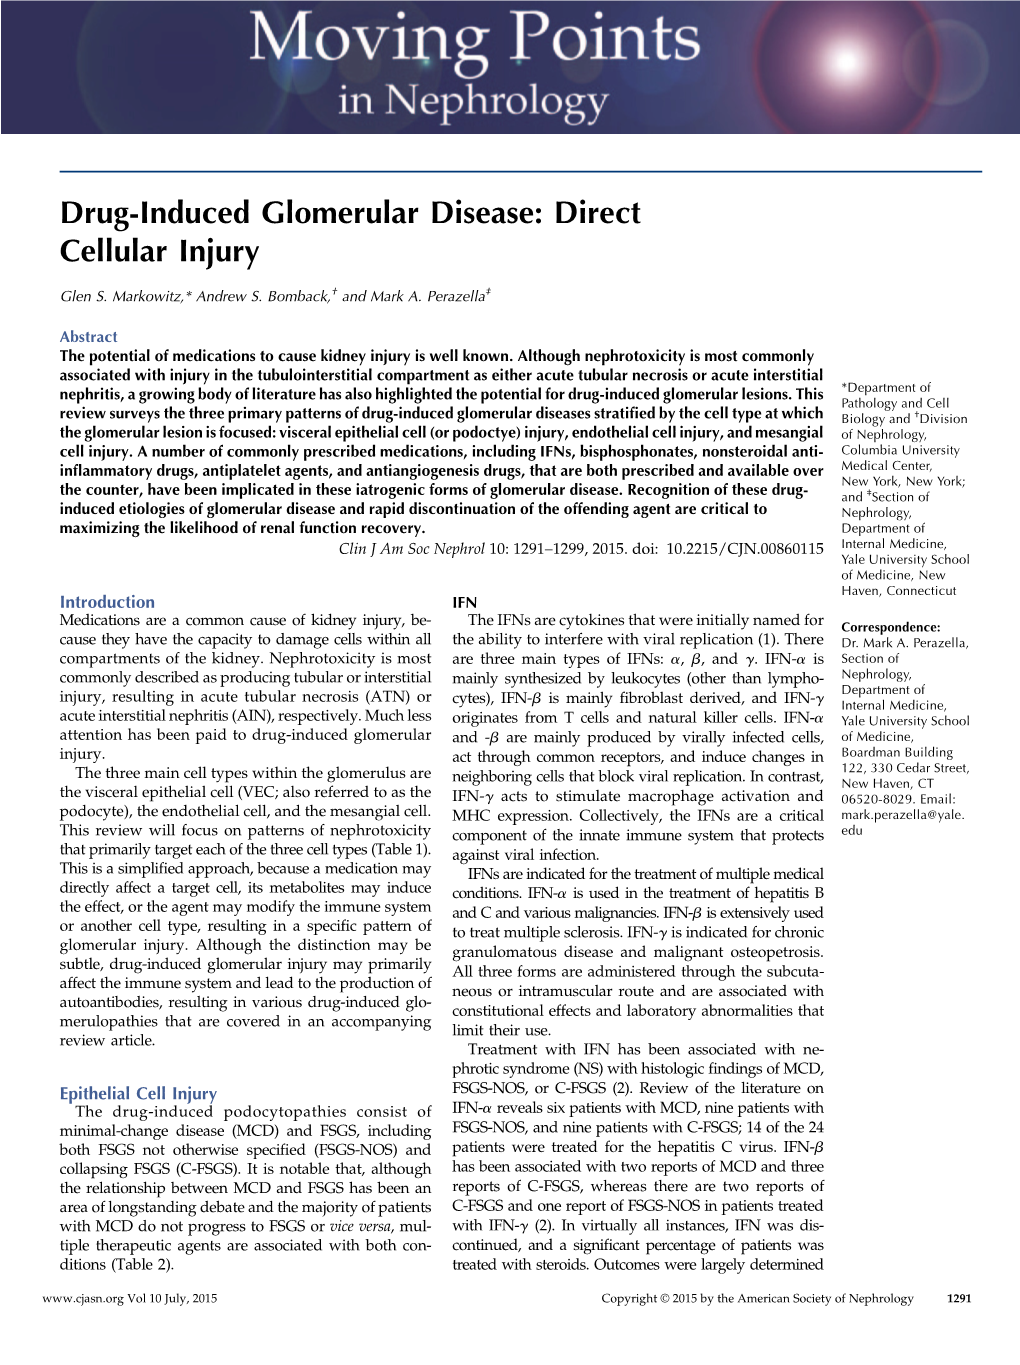 Drug-Induced Glomerular Disease: Direct Cellular Injury